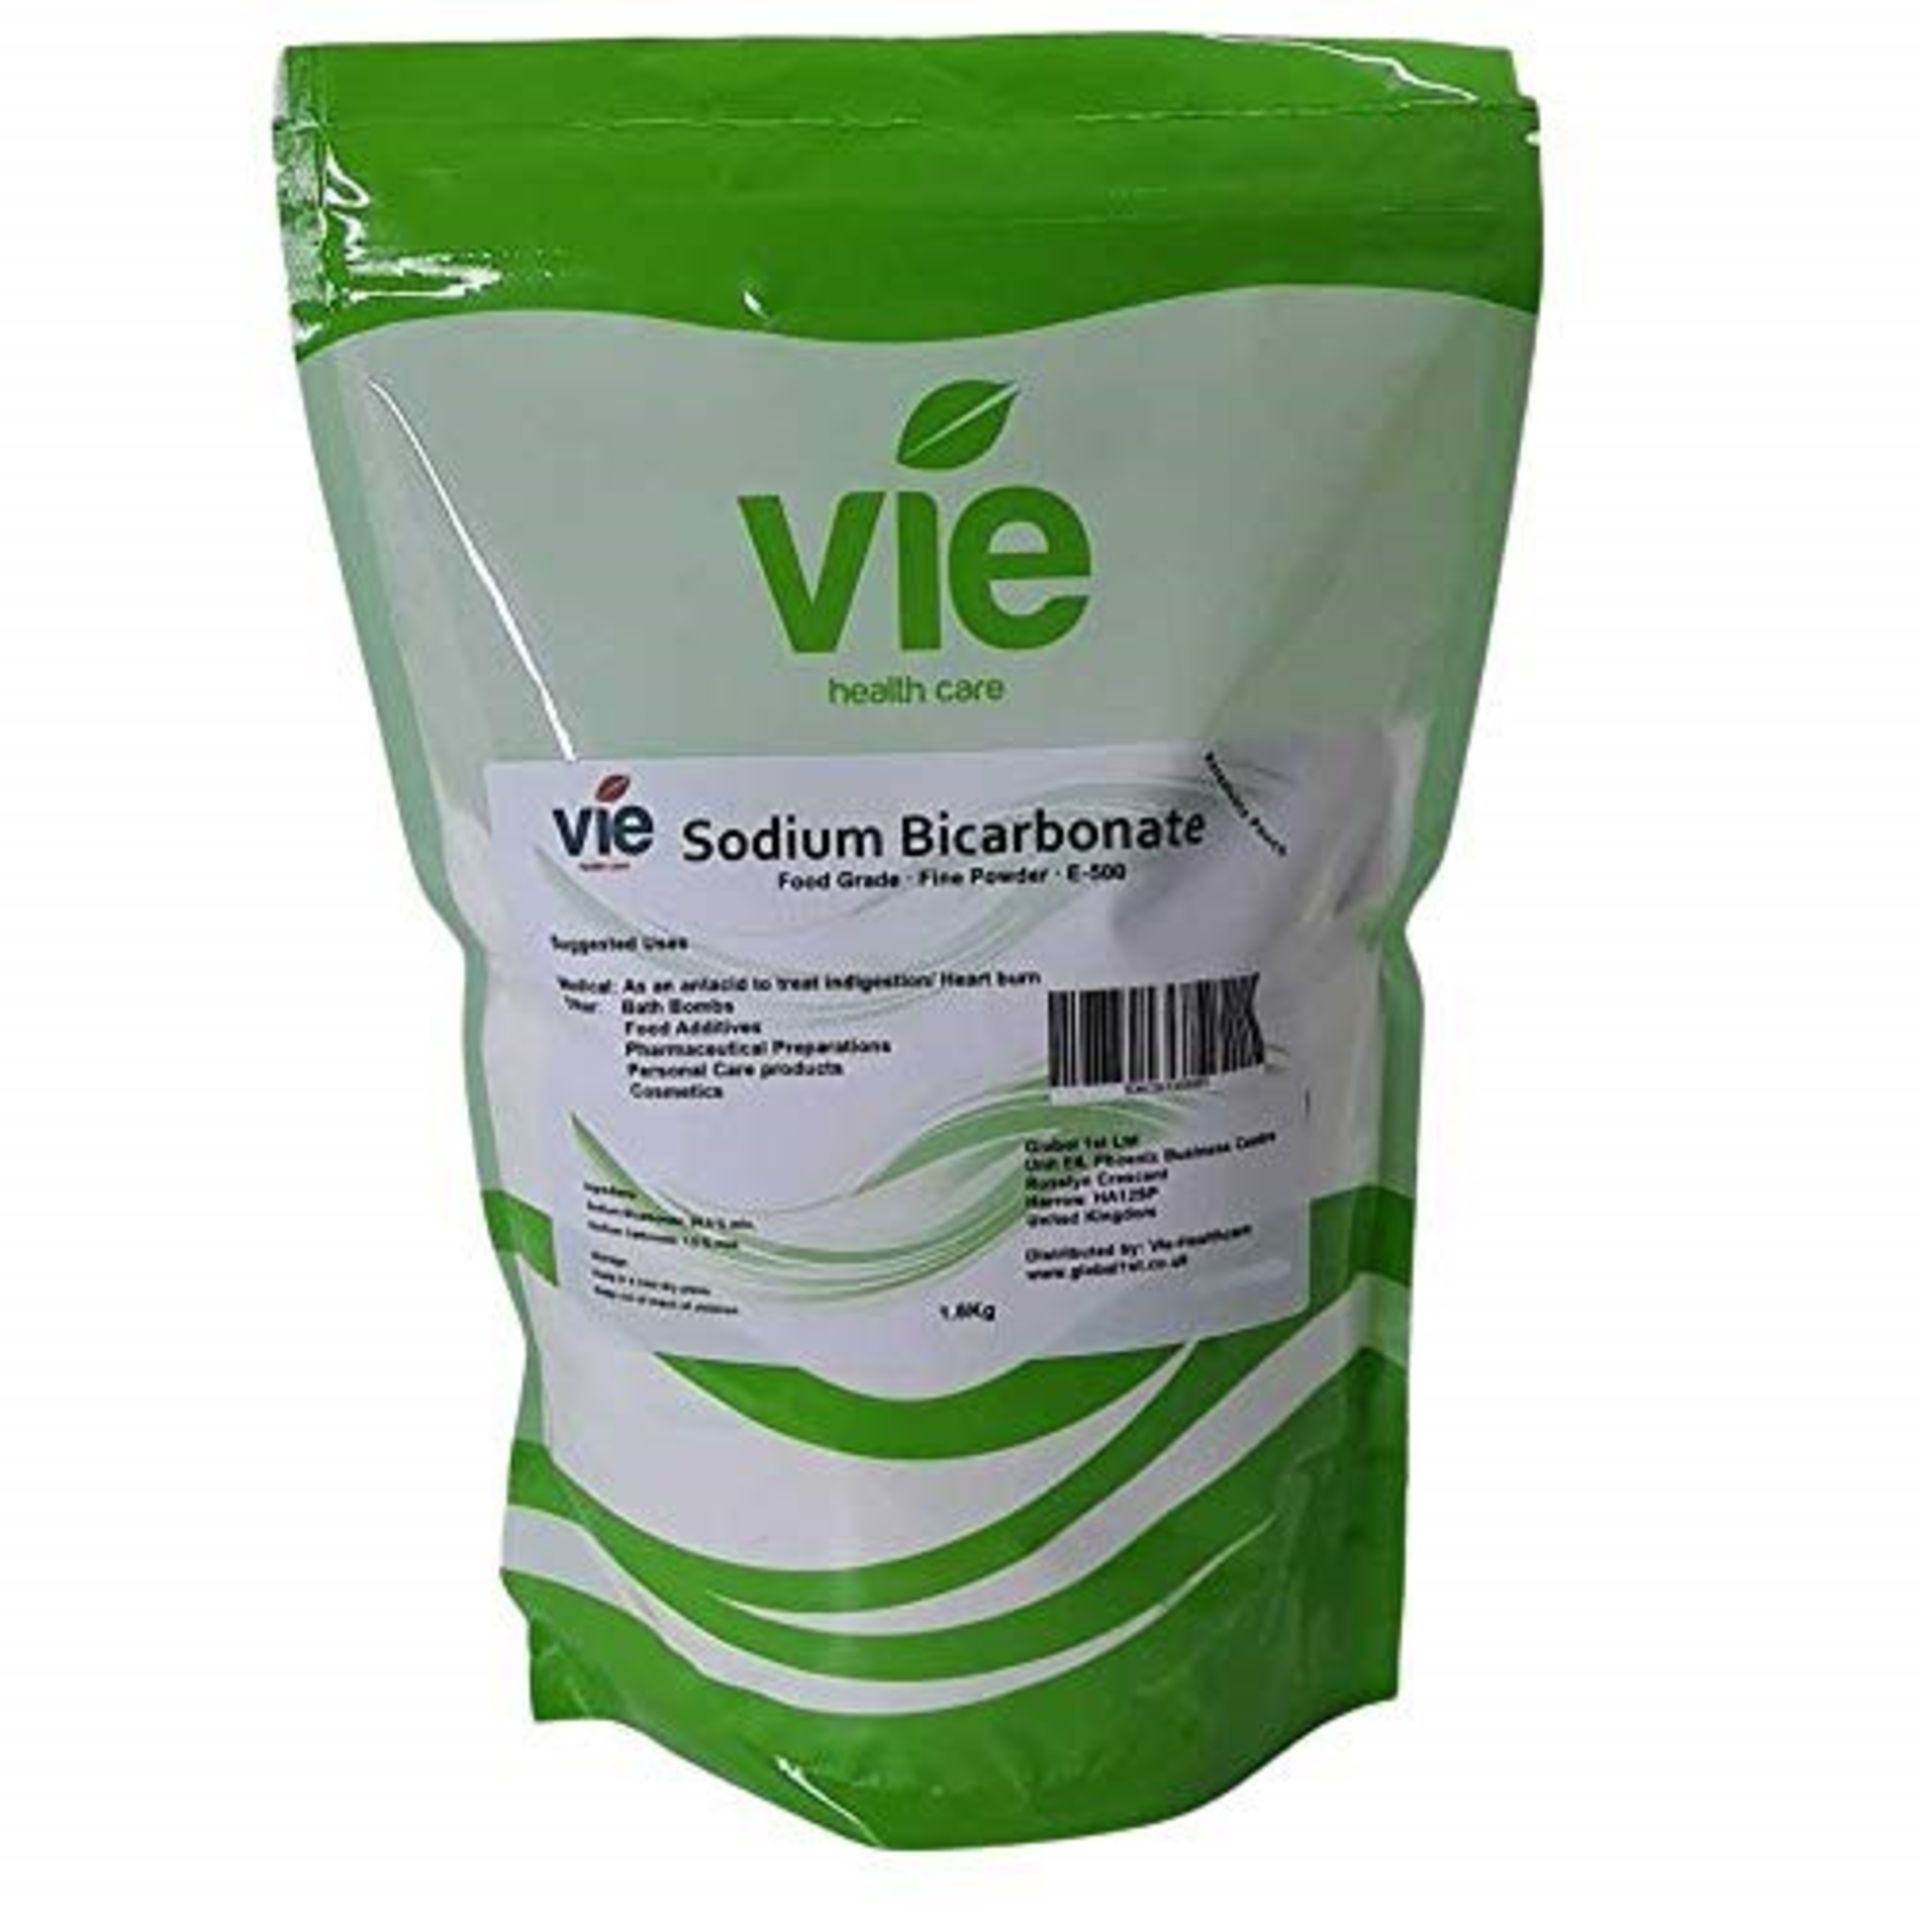 VIE Sodium Bicarbonate, Resealable Pouch, 1.8Kg - Image 3 of 4